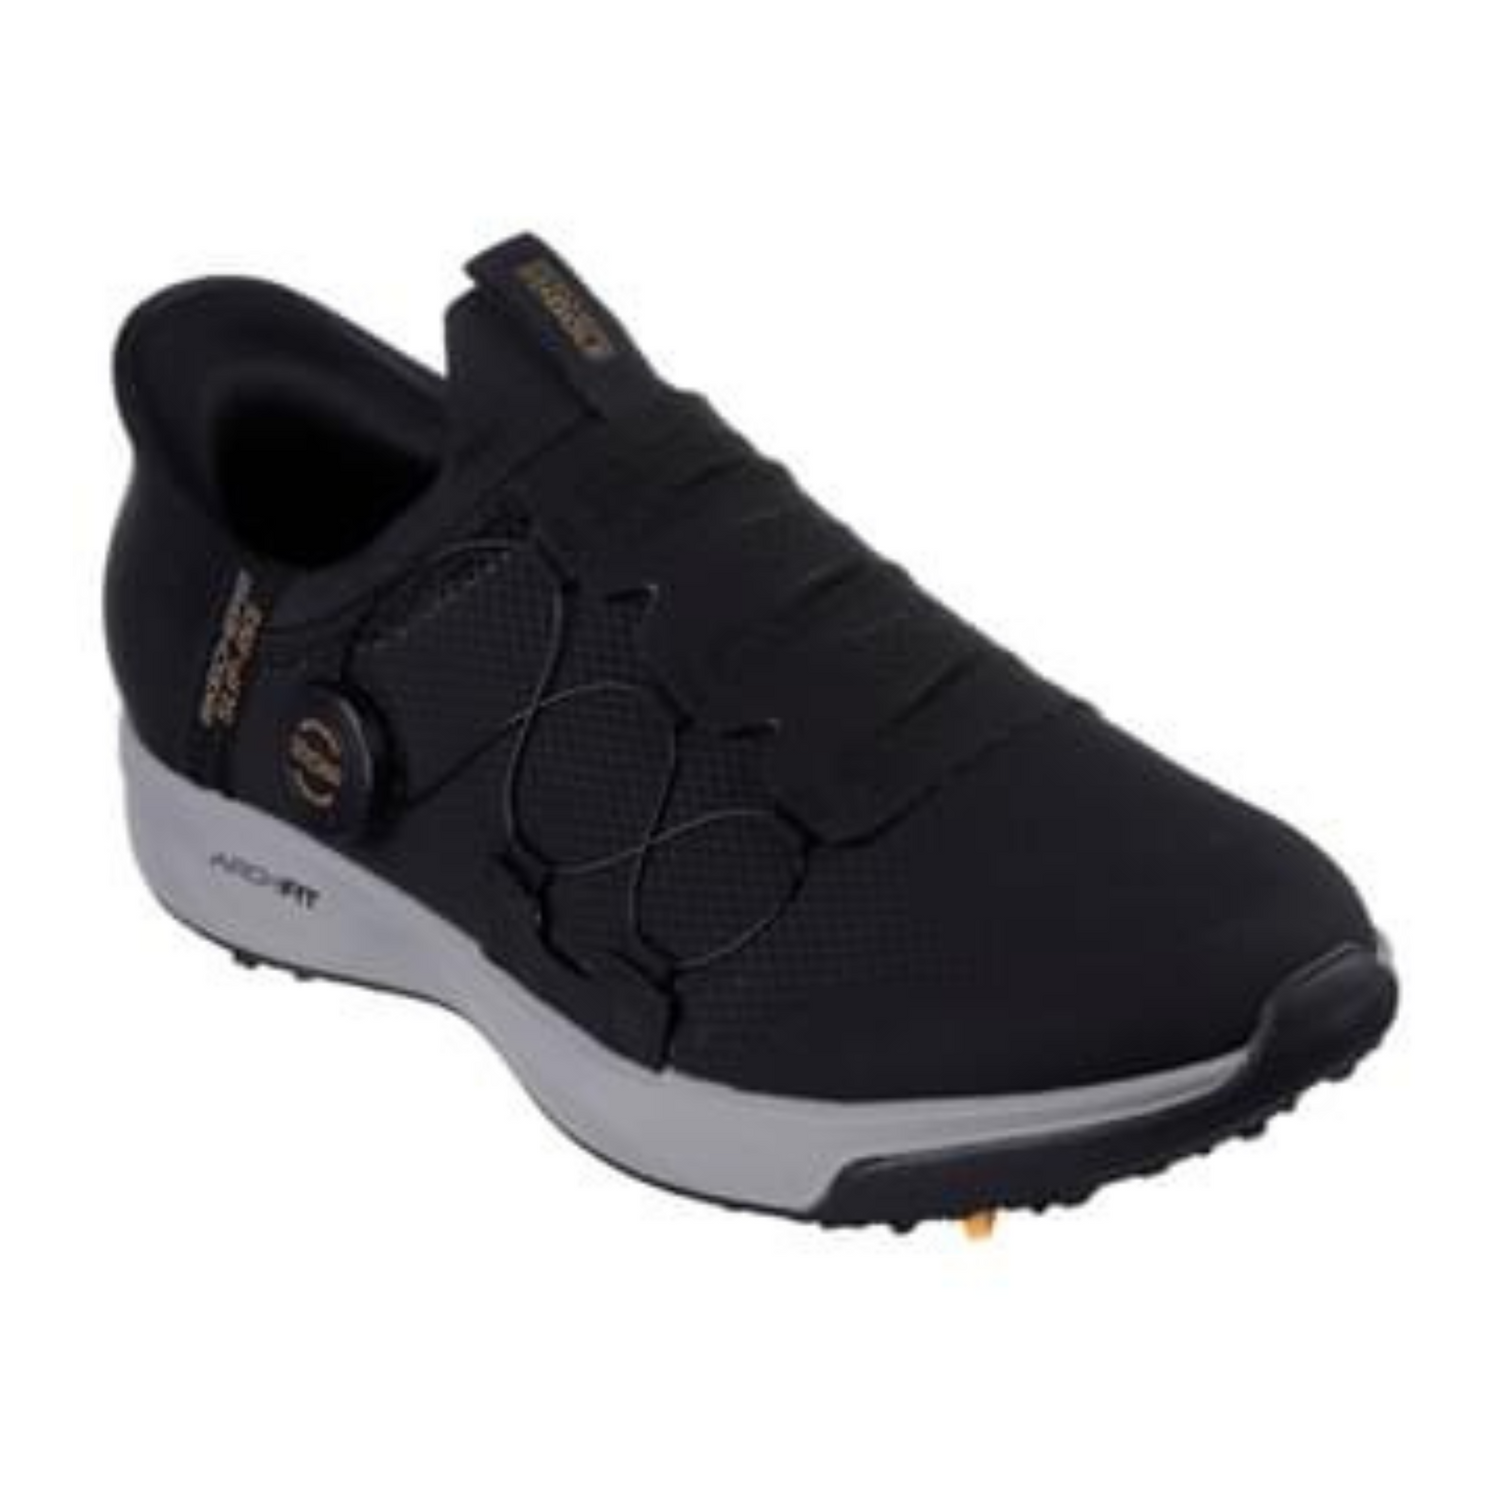 Skechers Elite Vortex Slip 'In Spiked Golf Shoes 214076 - Black   